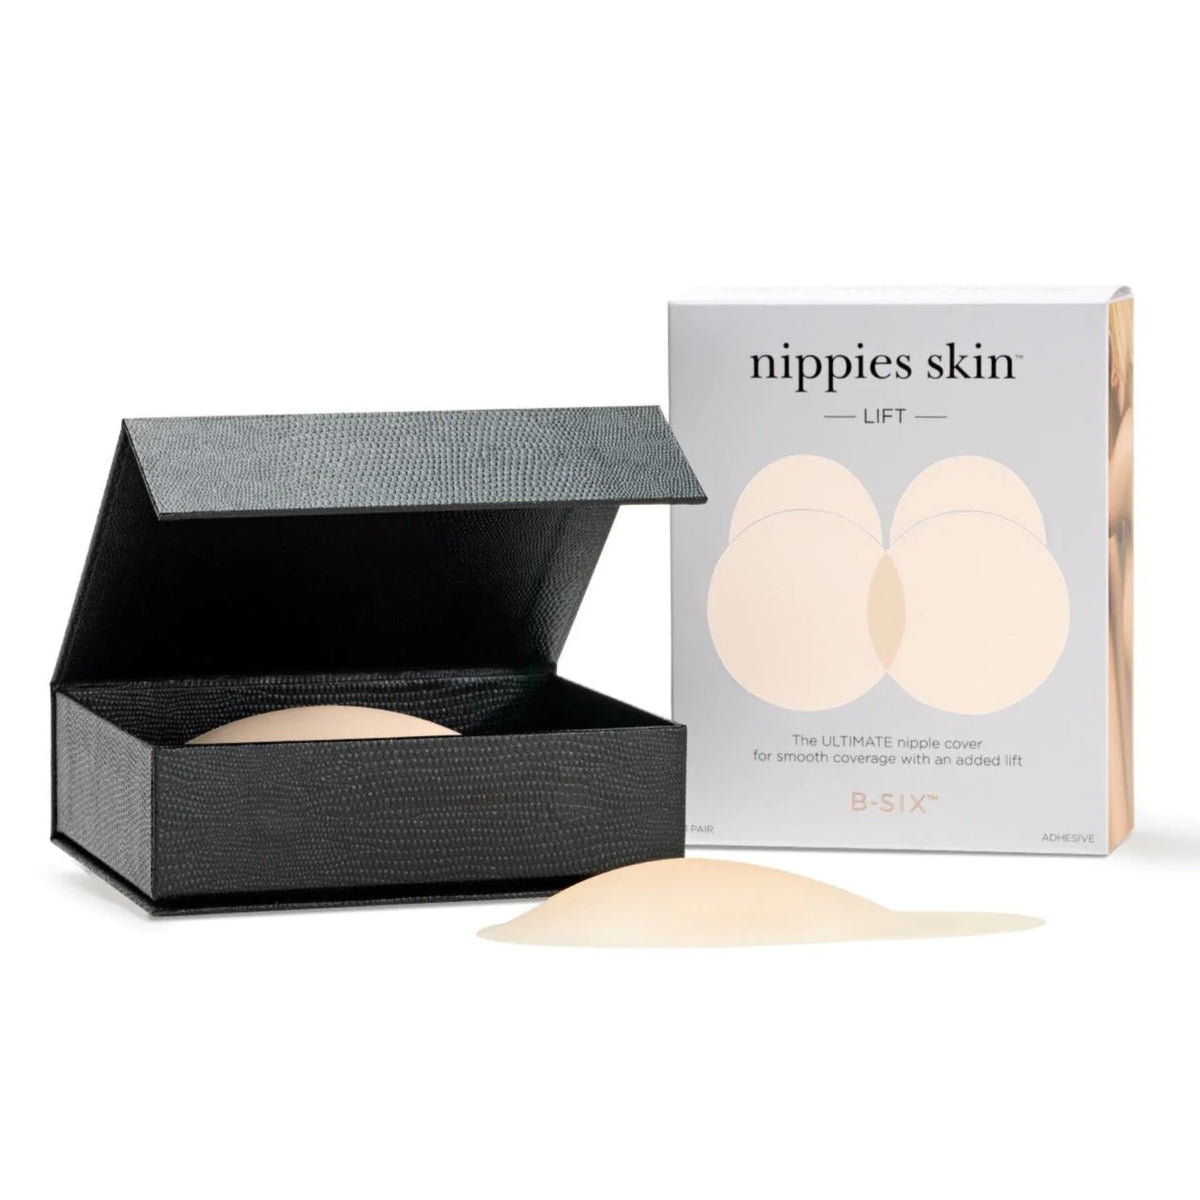 Bristol 6 Adhesive Nippies Skin Covers Light S1-Light - Free